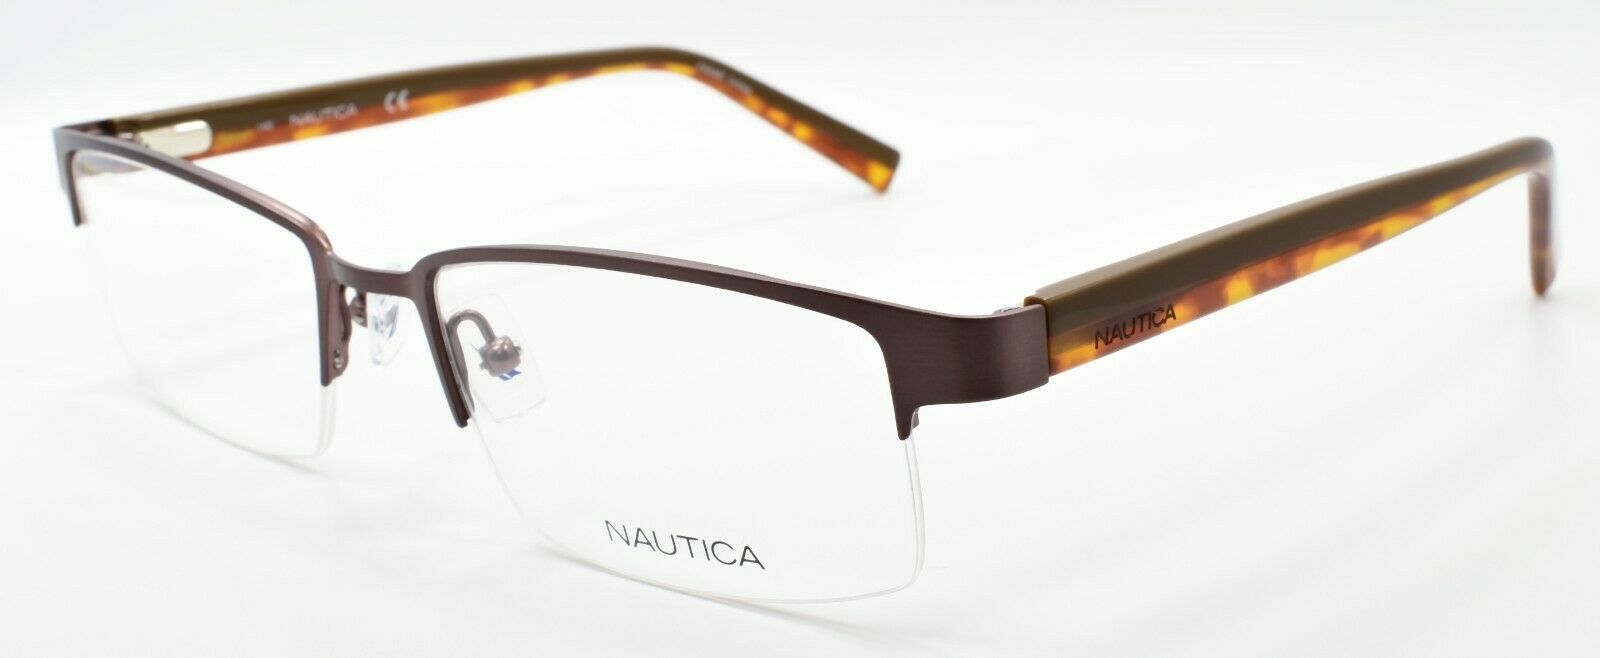 1-Nautica N7229 212 Men's Eyeglasses Frames Half-rim 53-18-140 Light Brown-688940442540-IKSpecs